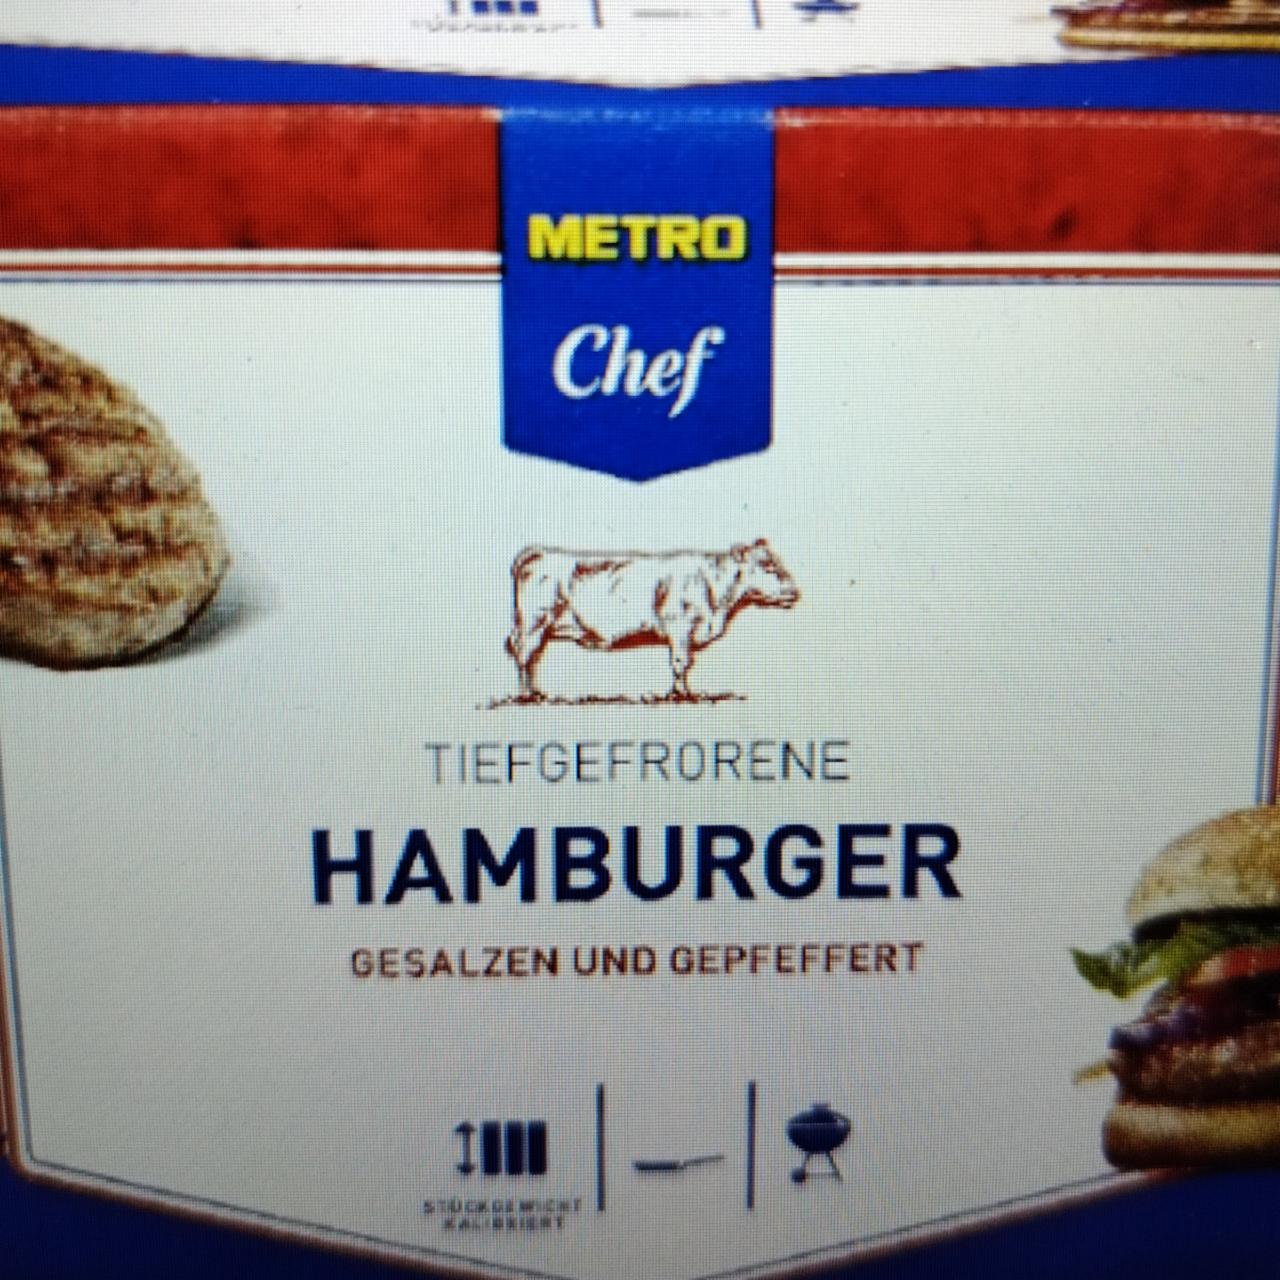 Fotografie - Hamburger Metro Chef